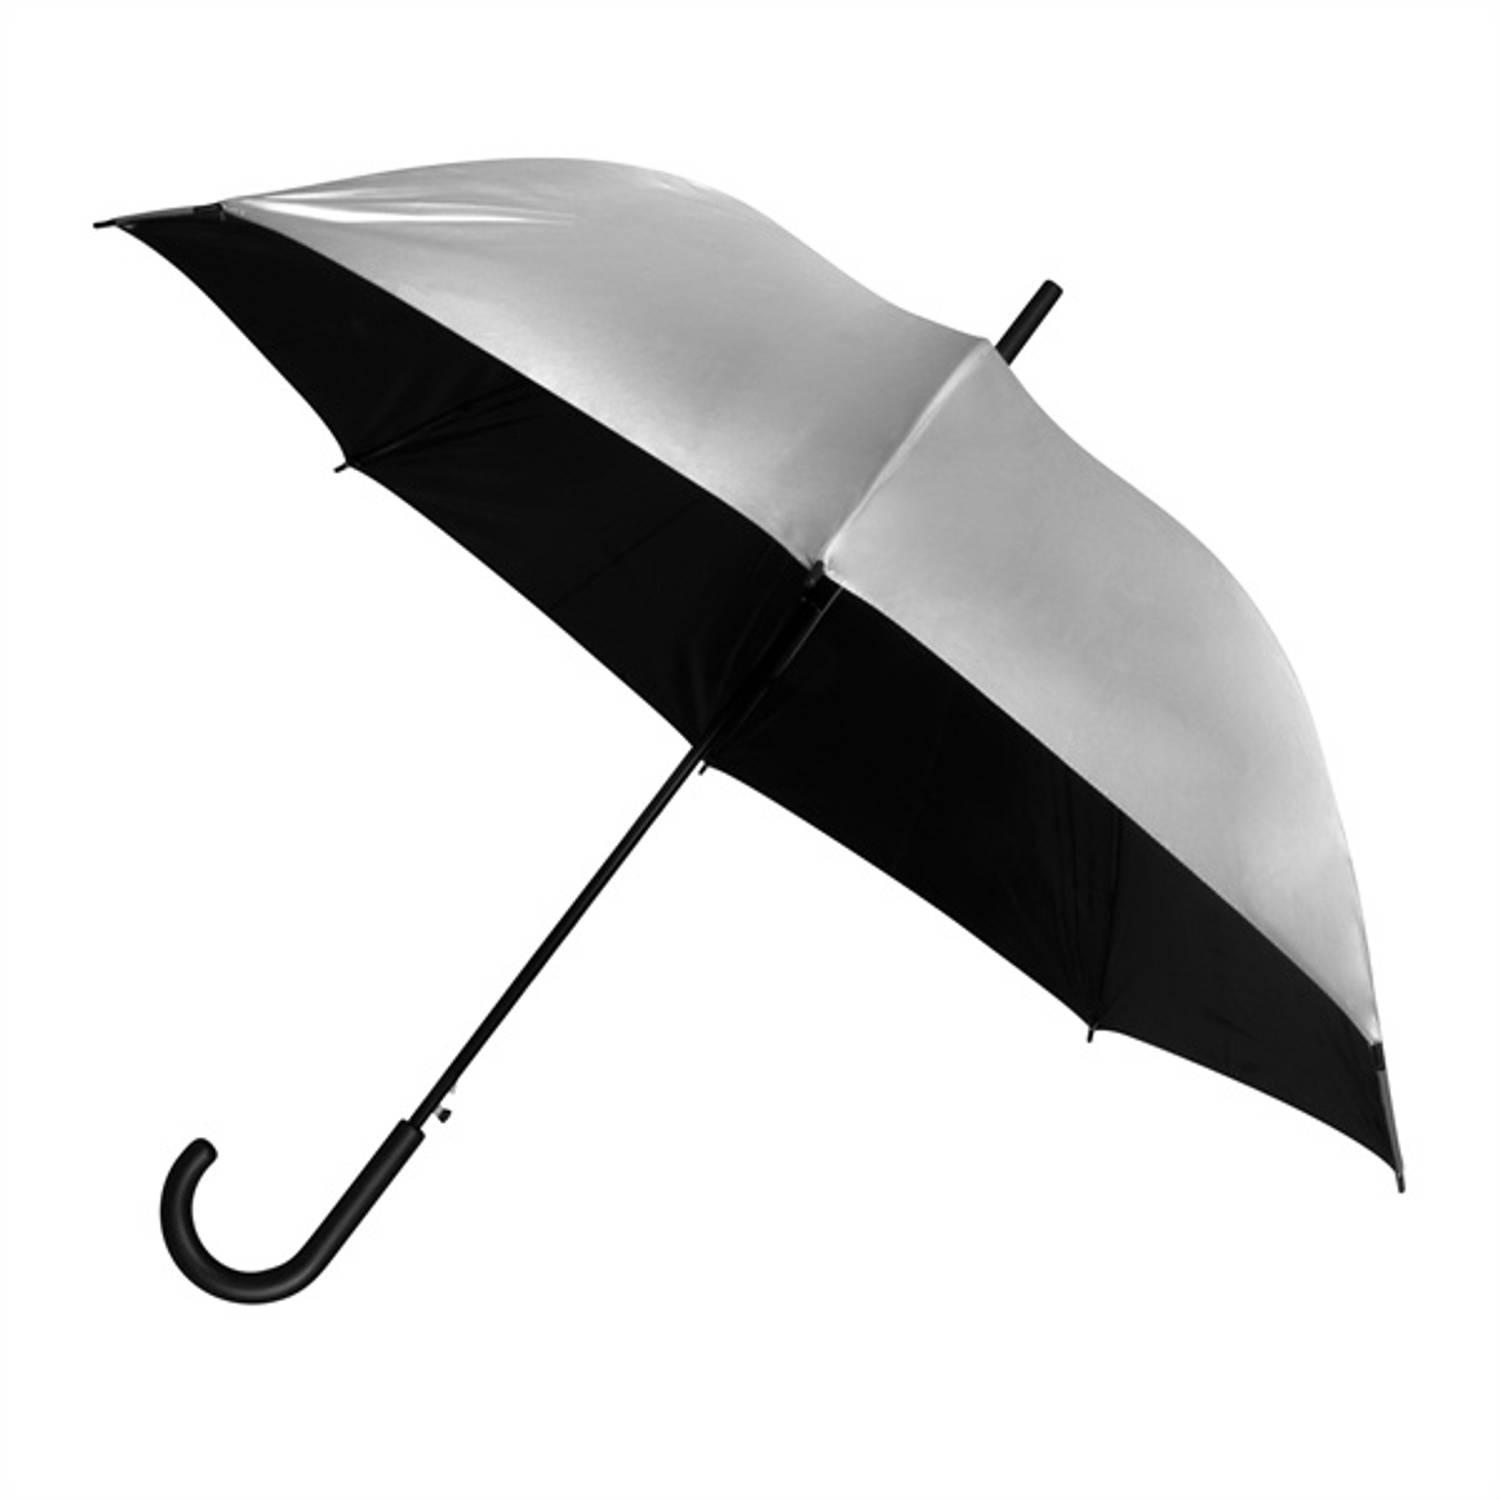 Falconetti paraplu automatisch 103 cm zilver-zwart